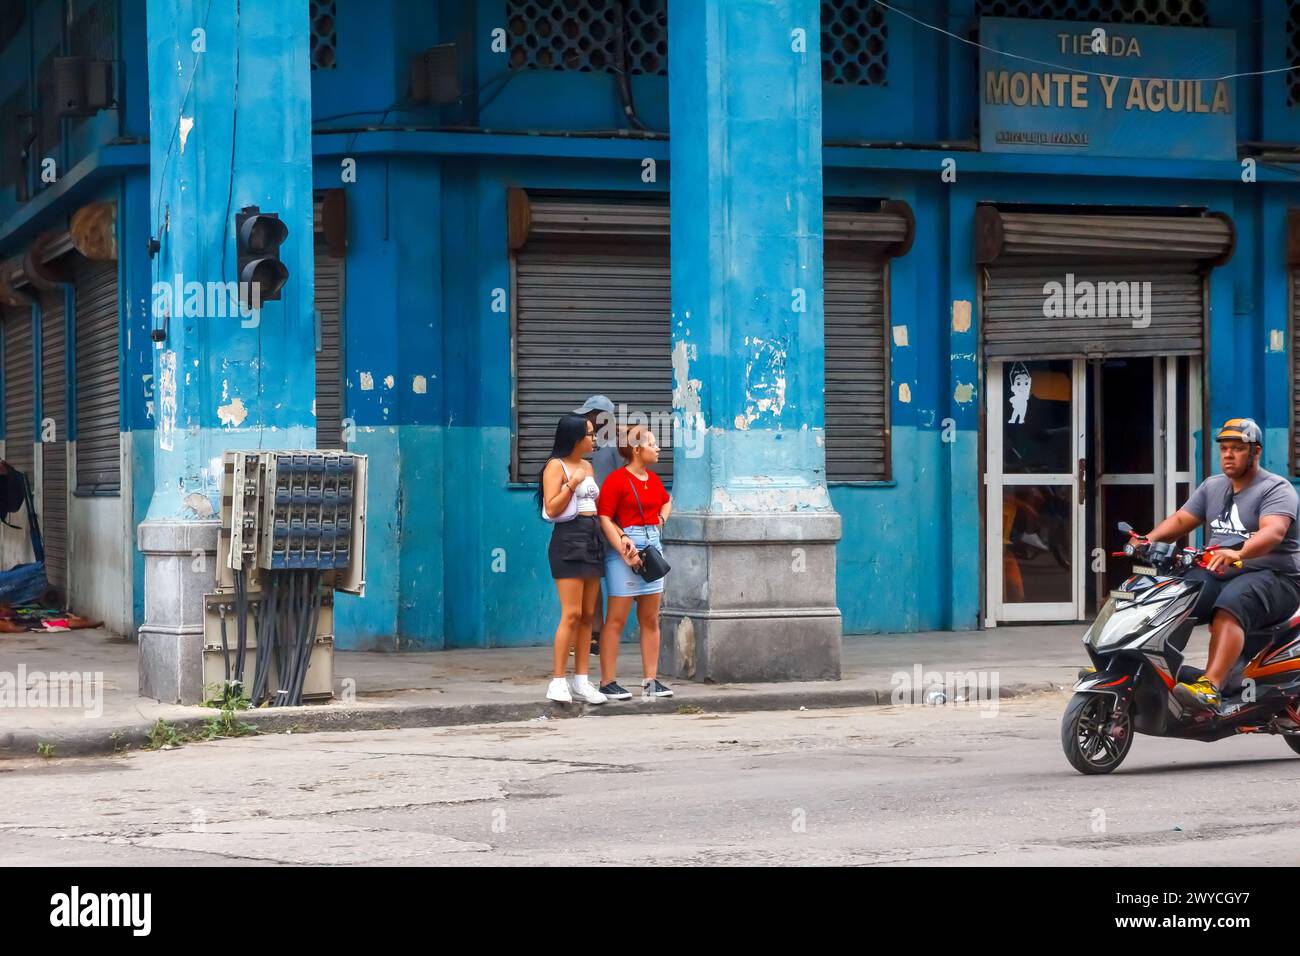 Cuban people lifestyle in Havana, Cuba Stock Photo